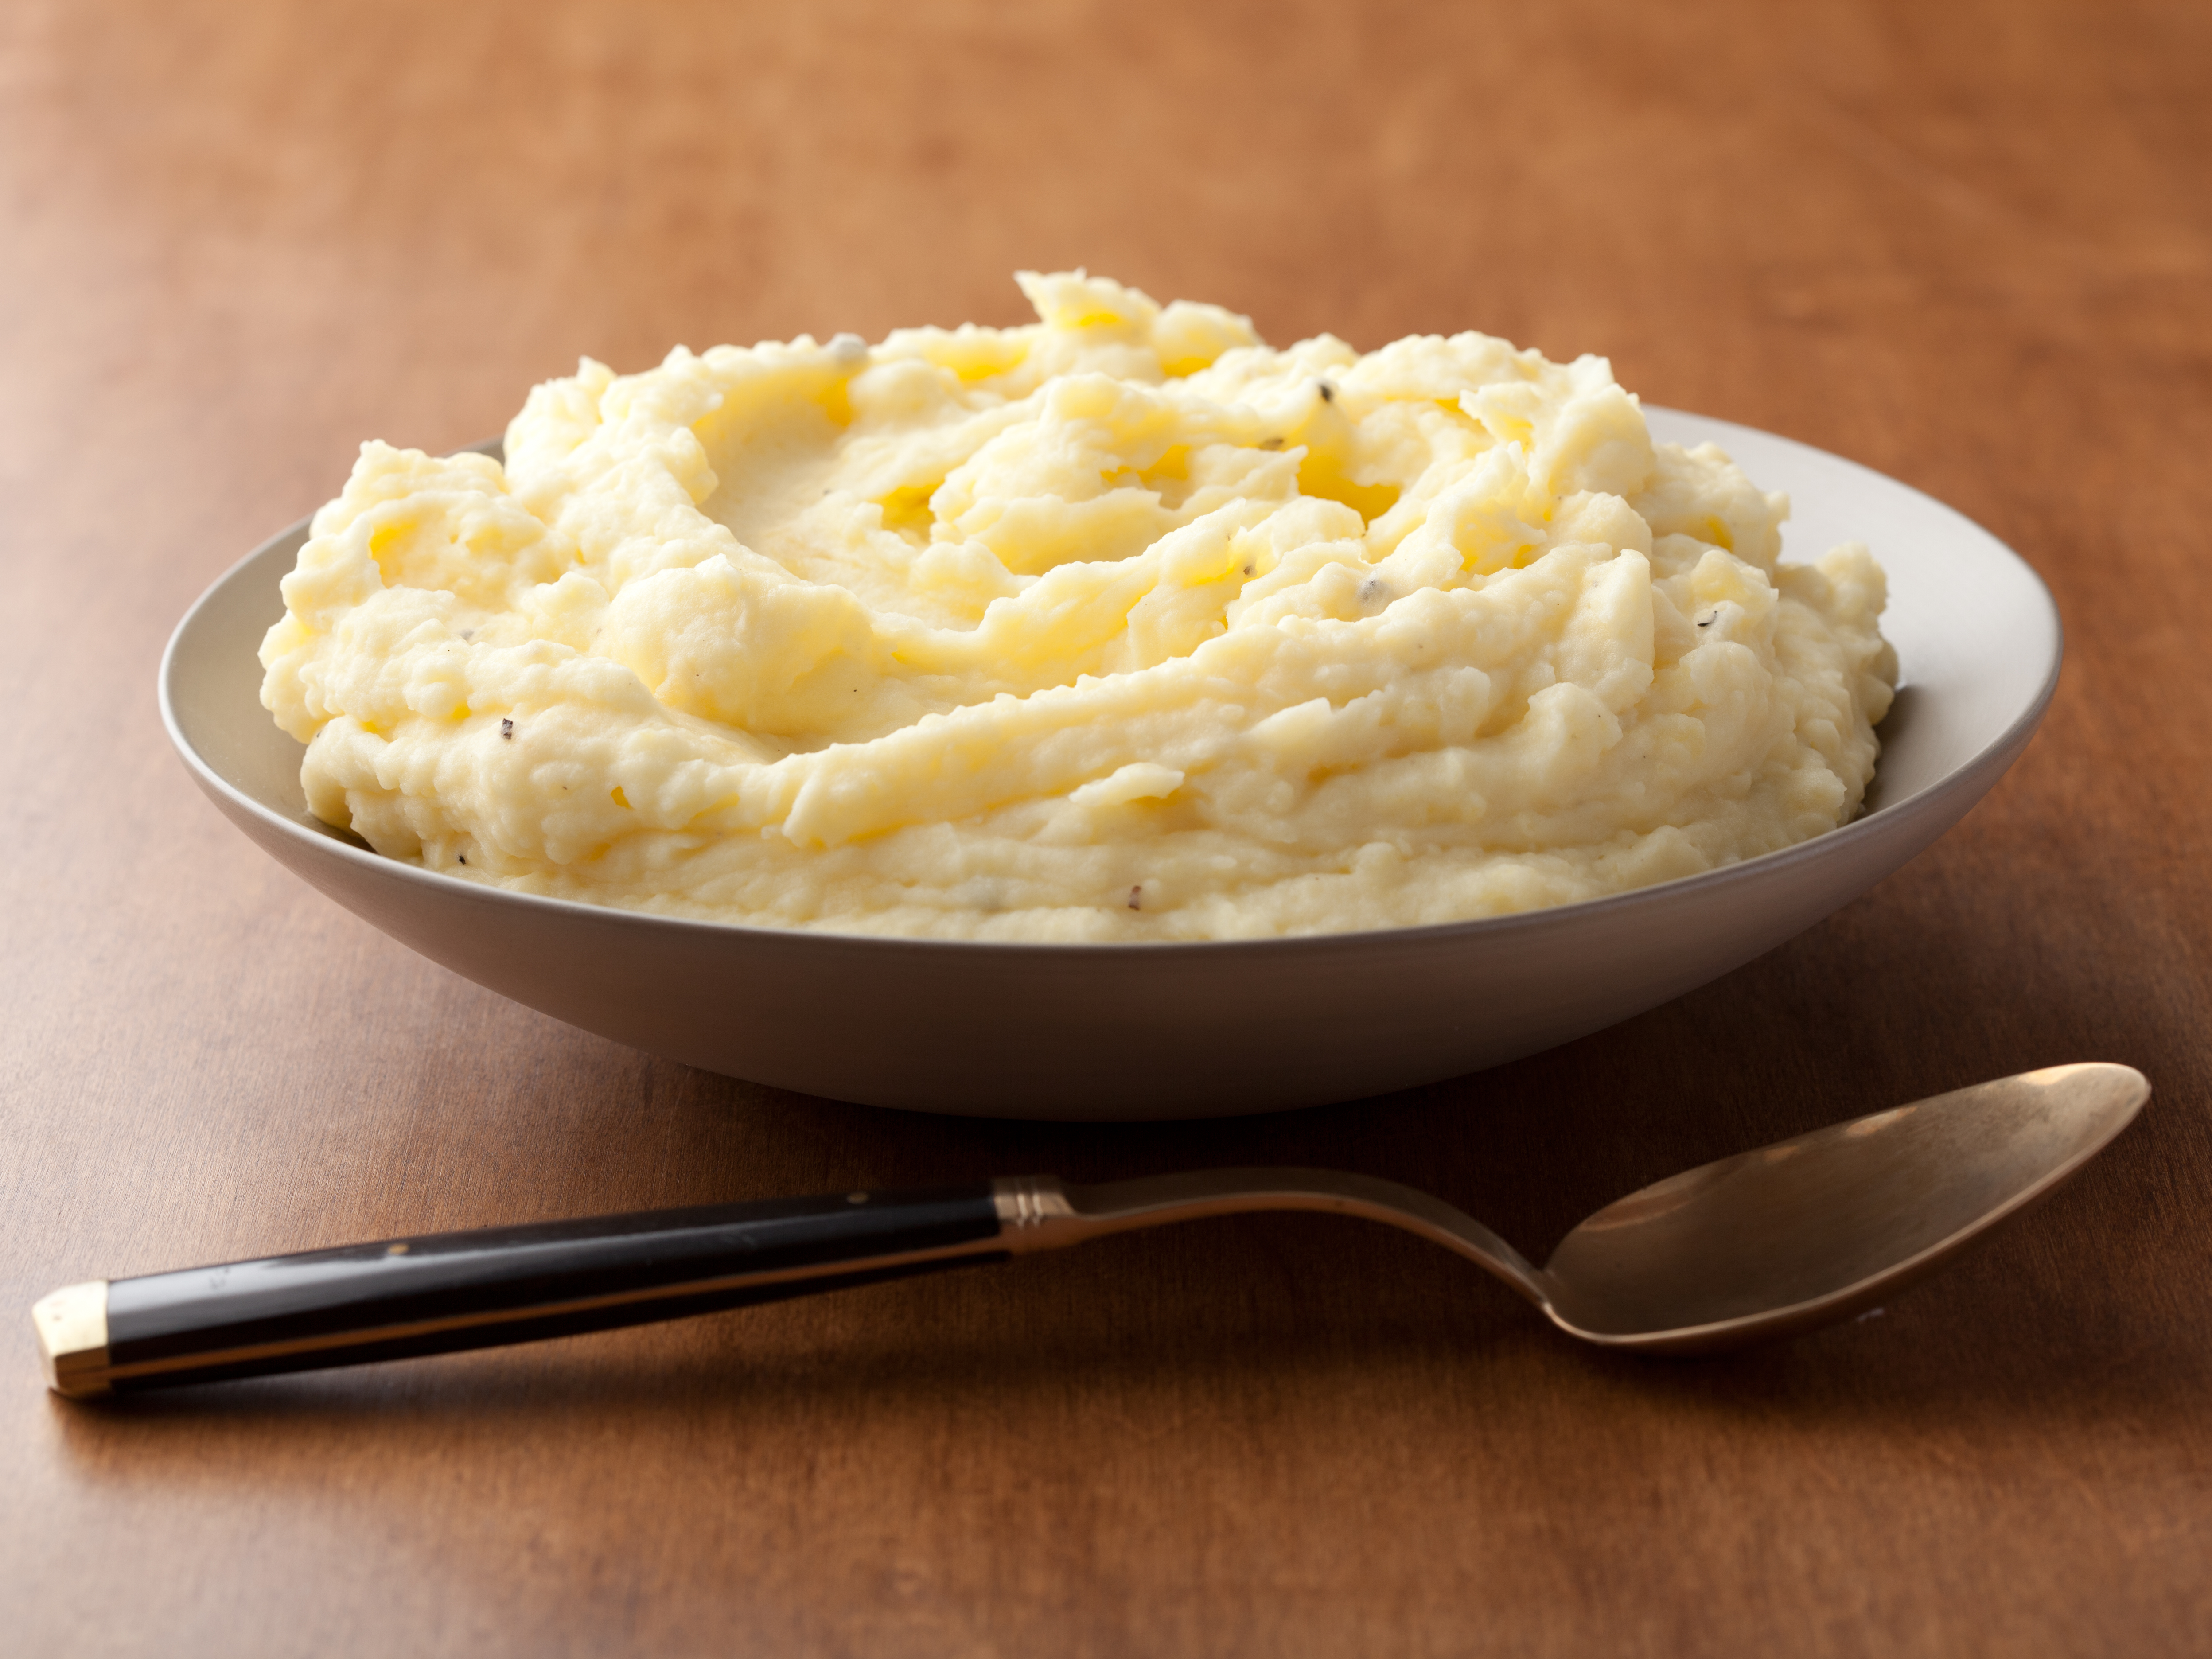 https://www.foodnetwork.com/content/dam/images/food/fullset/2011/8/10/1/Thanksgiving-2011_IG1C18-sour-cream-mashed-potatoes_s4x3.jpg